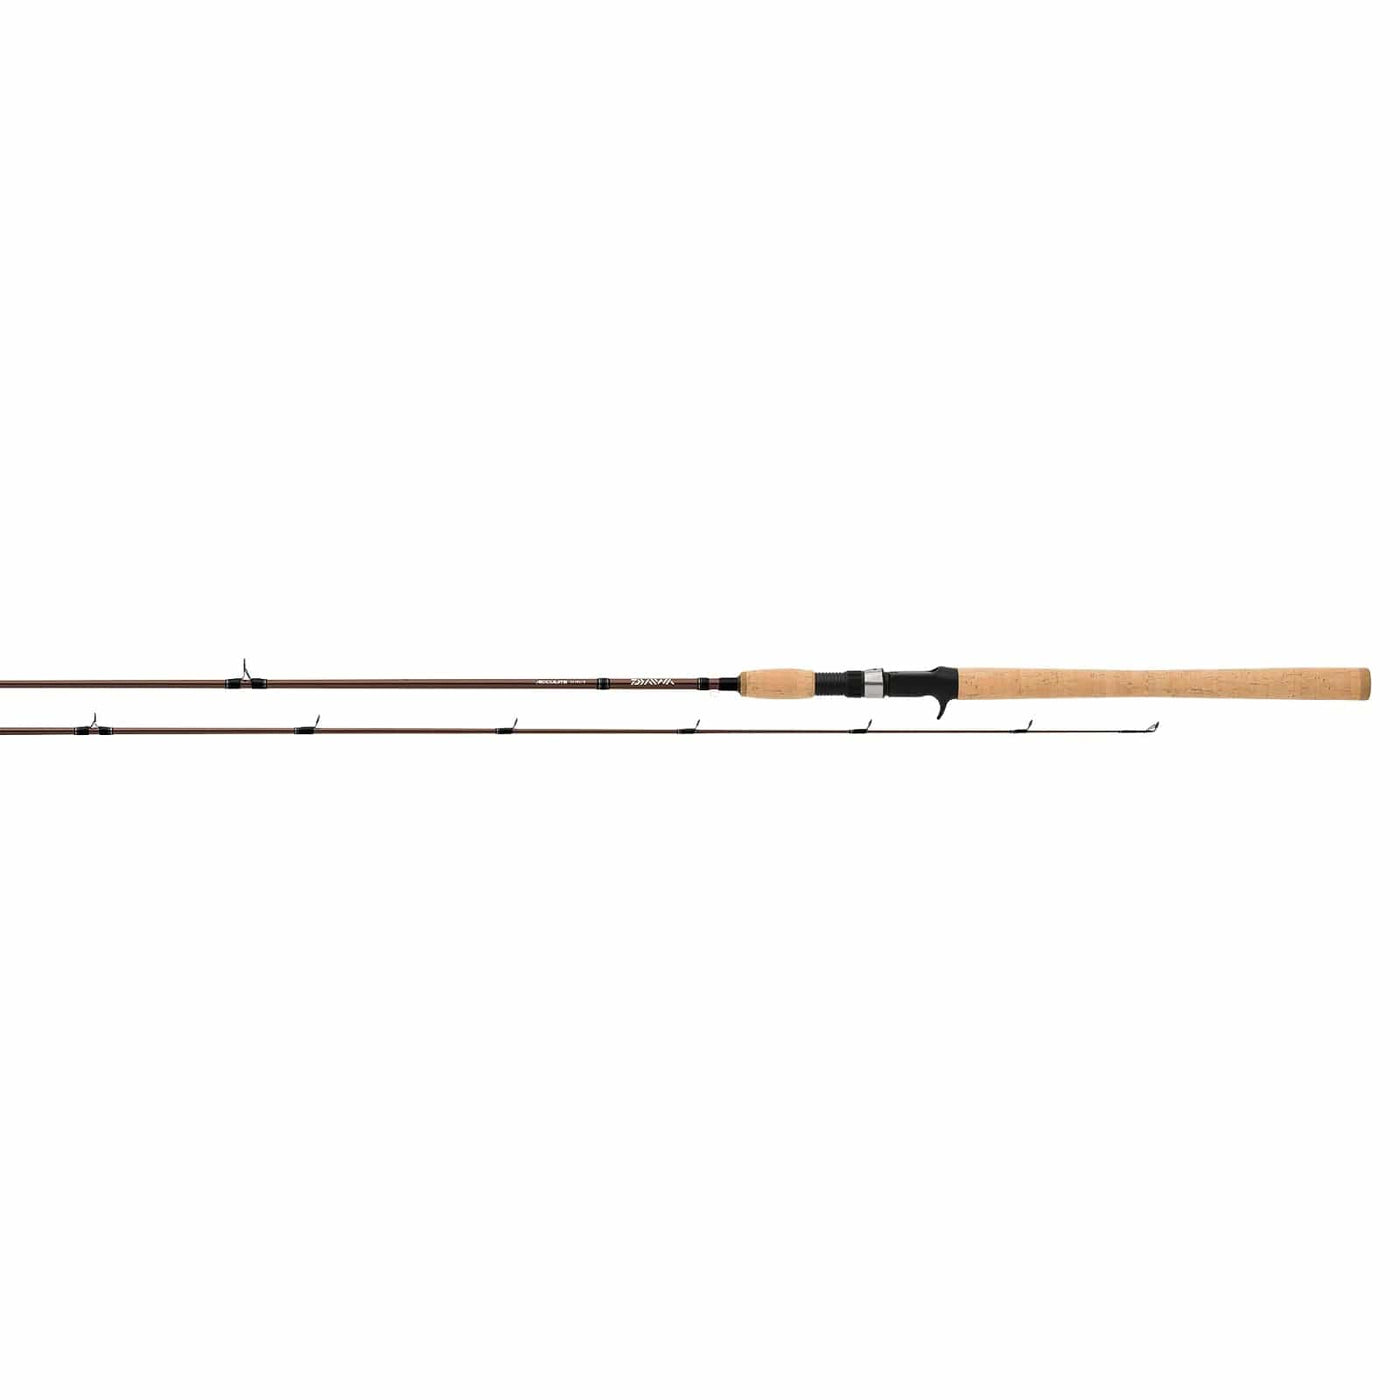 Daiwa Daiwa Acculite Spinning Rod ACLT862MFS 8 ft 6 in 2 pc Fishing